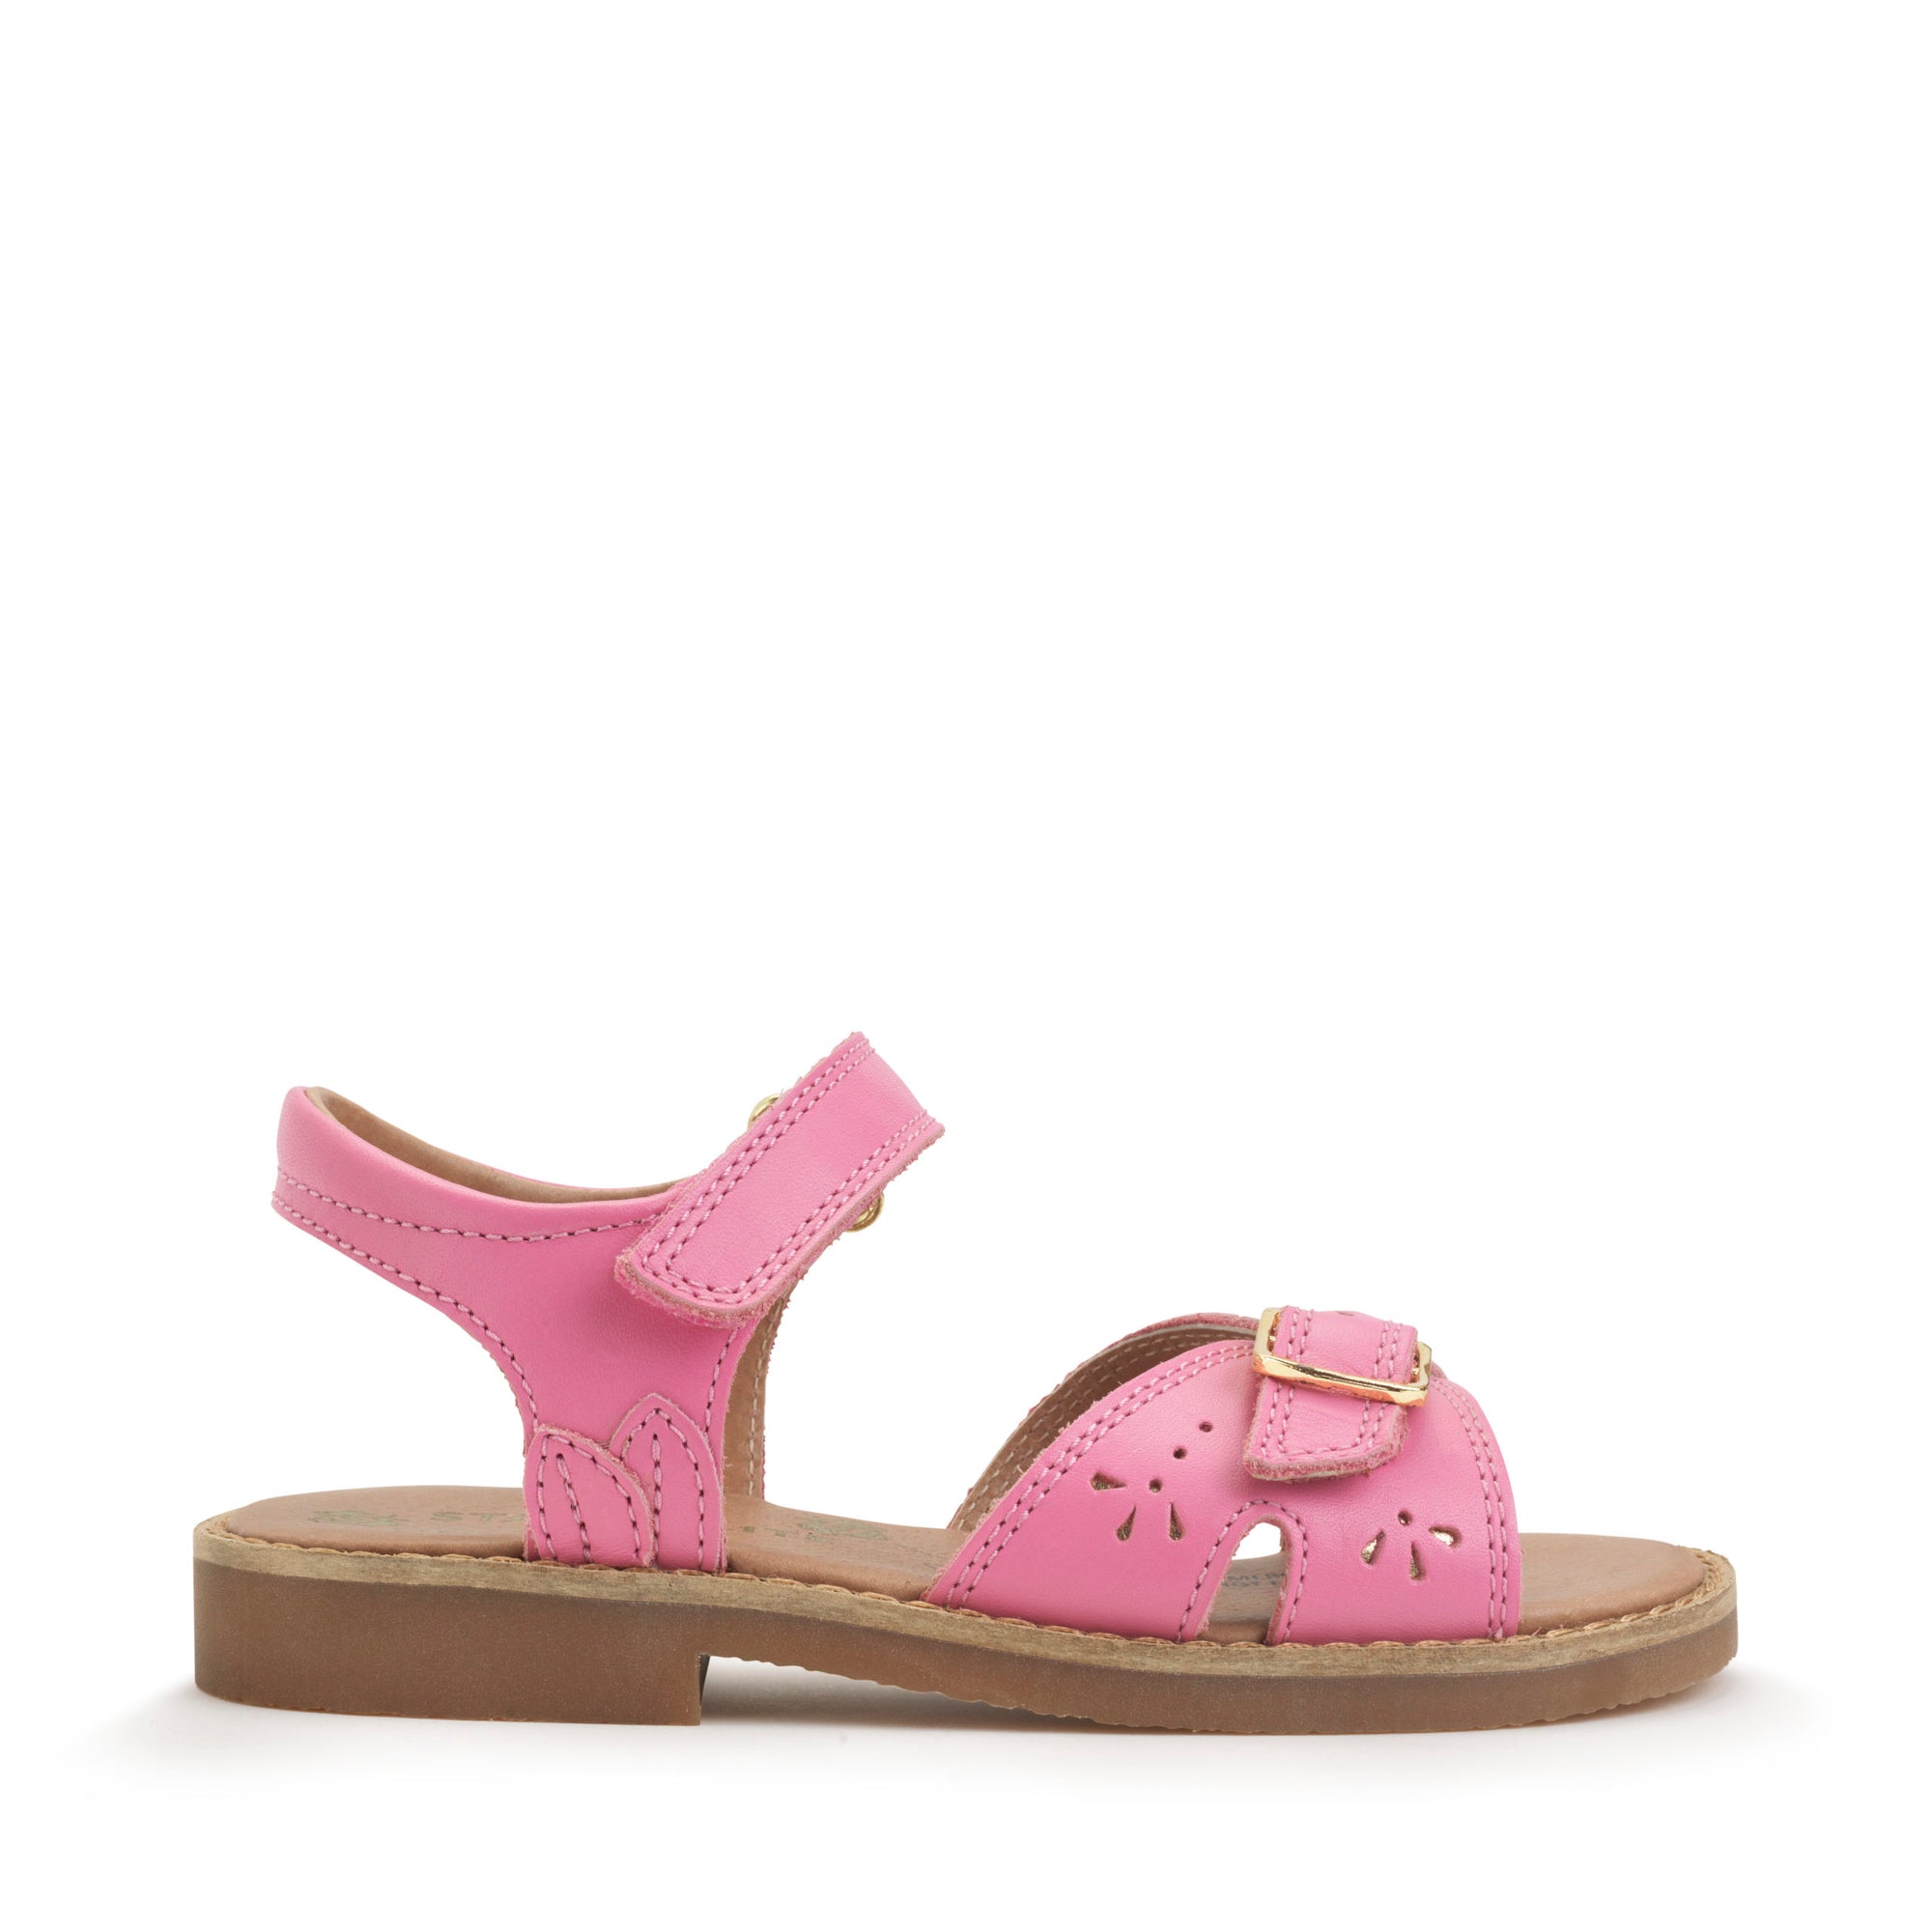 Startrite Holiday Sandals 5201 Rose Pink F Fit Footwear UK7 INFANT / Pink,UK8 INFANT / Pink,UK9 KIDS / Pink,UK10 KIDS / Pink,UK11 KIDS / Pink,UK12 KIDS / Pink,UK13 KIDS / Pink,UK1 KIDS / Pink